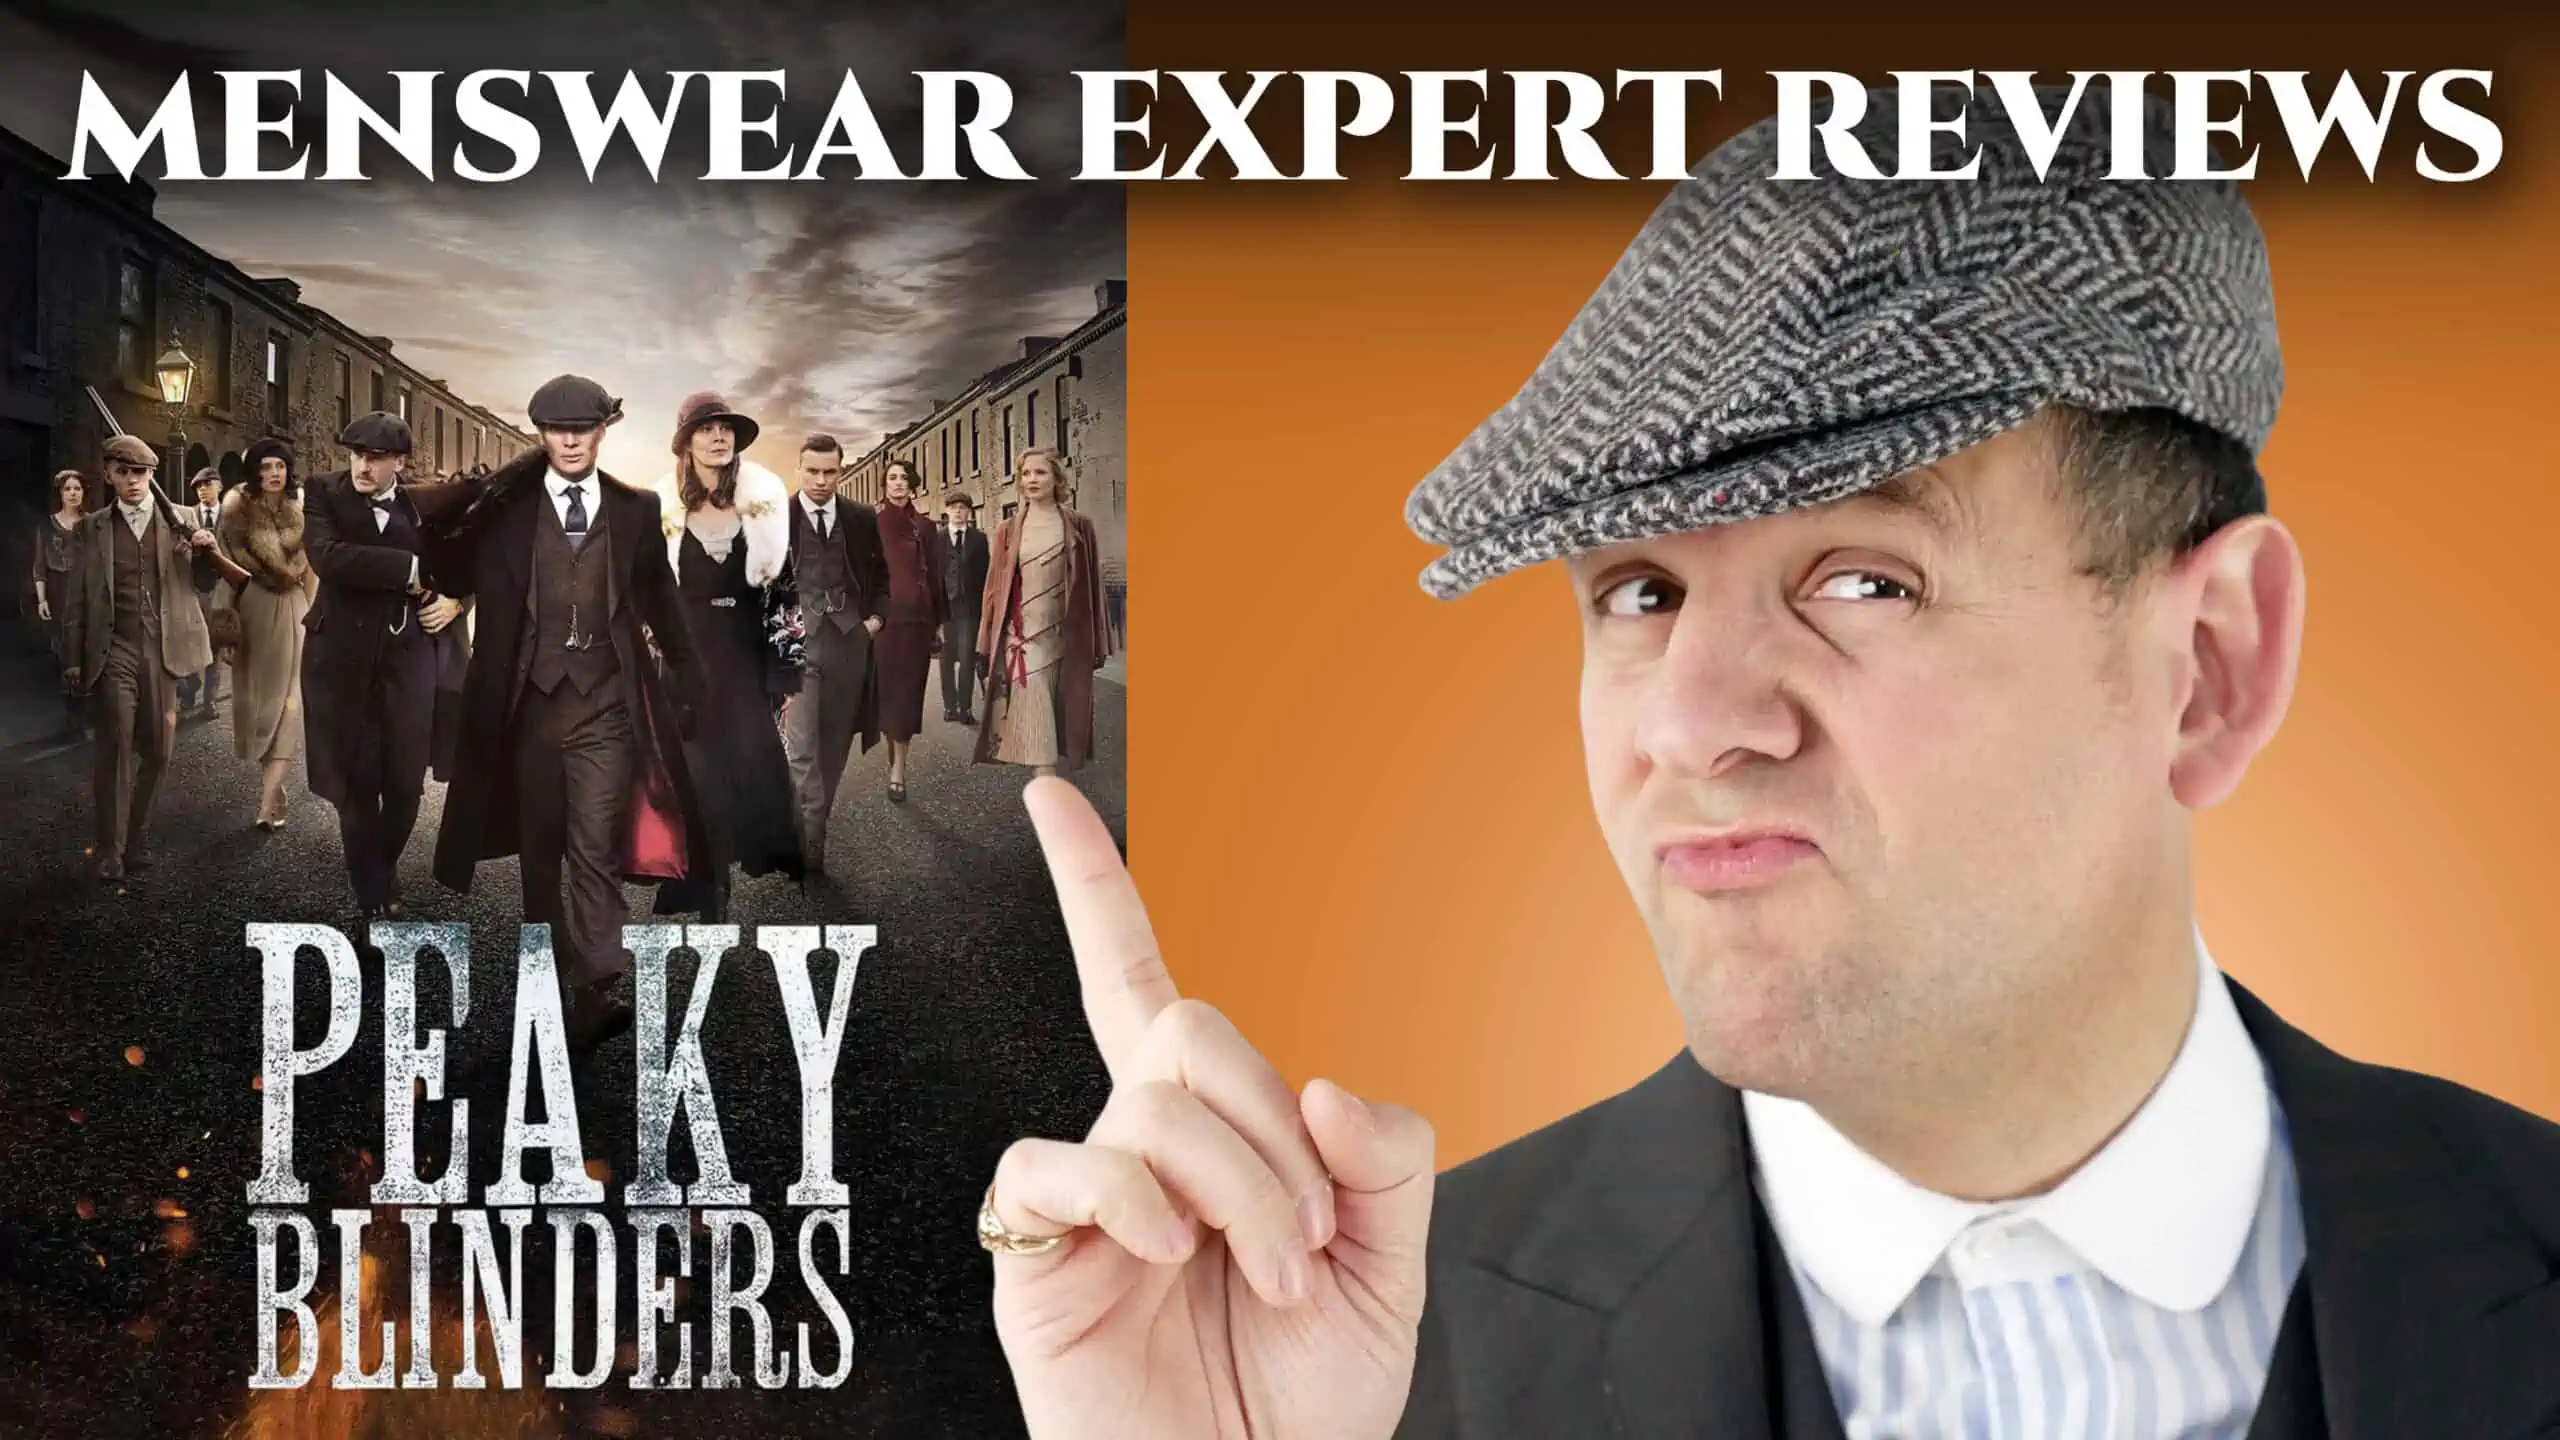 Peaky Blinders, series 2, episode 1 - TV review: Second series